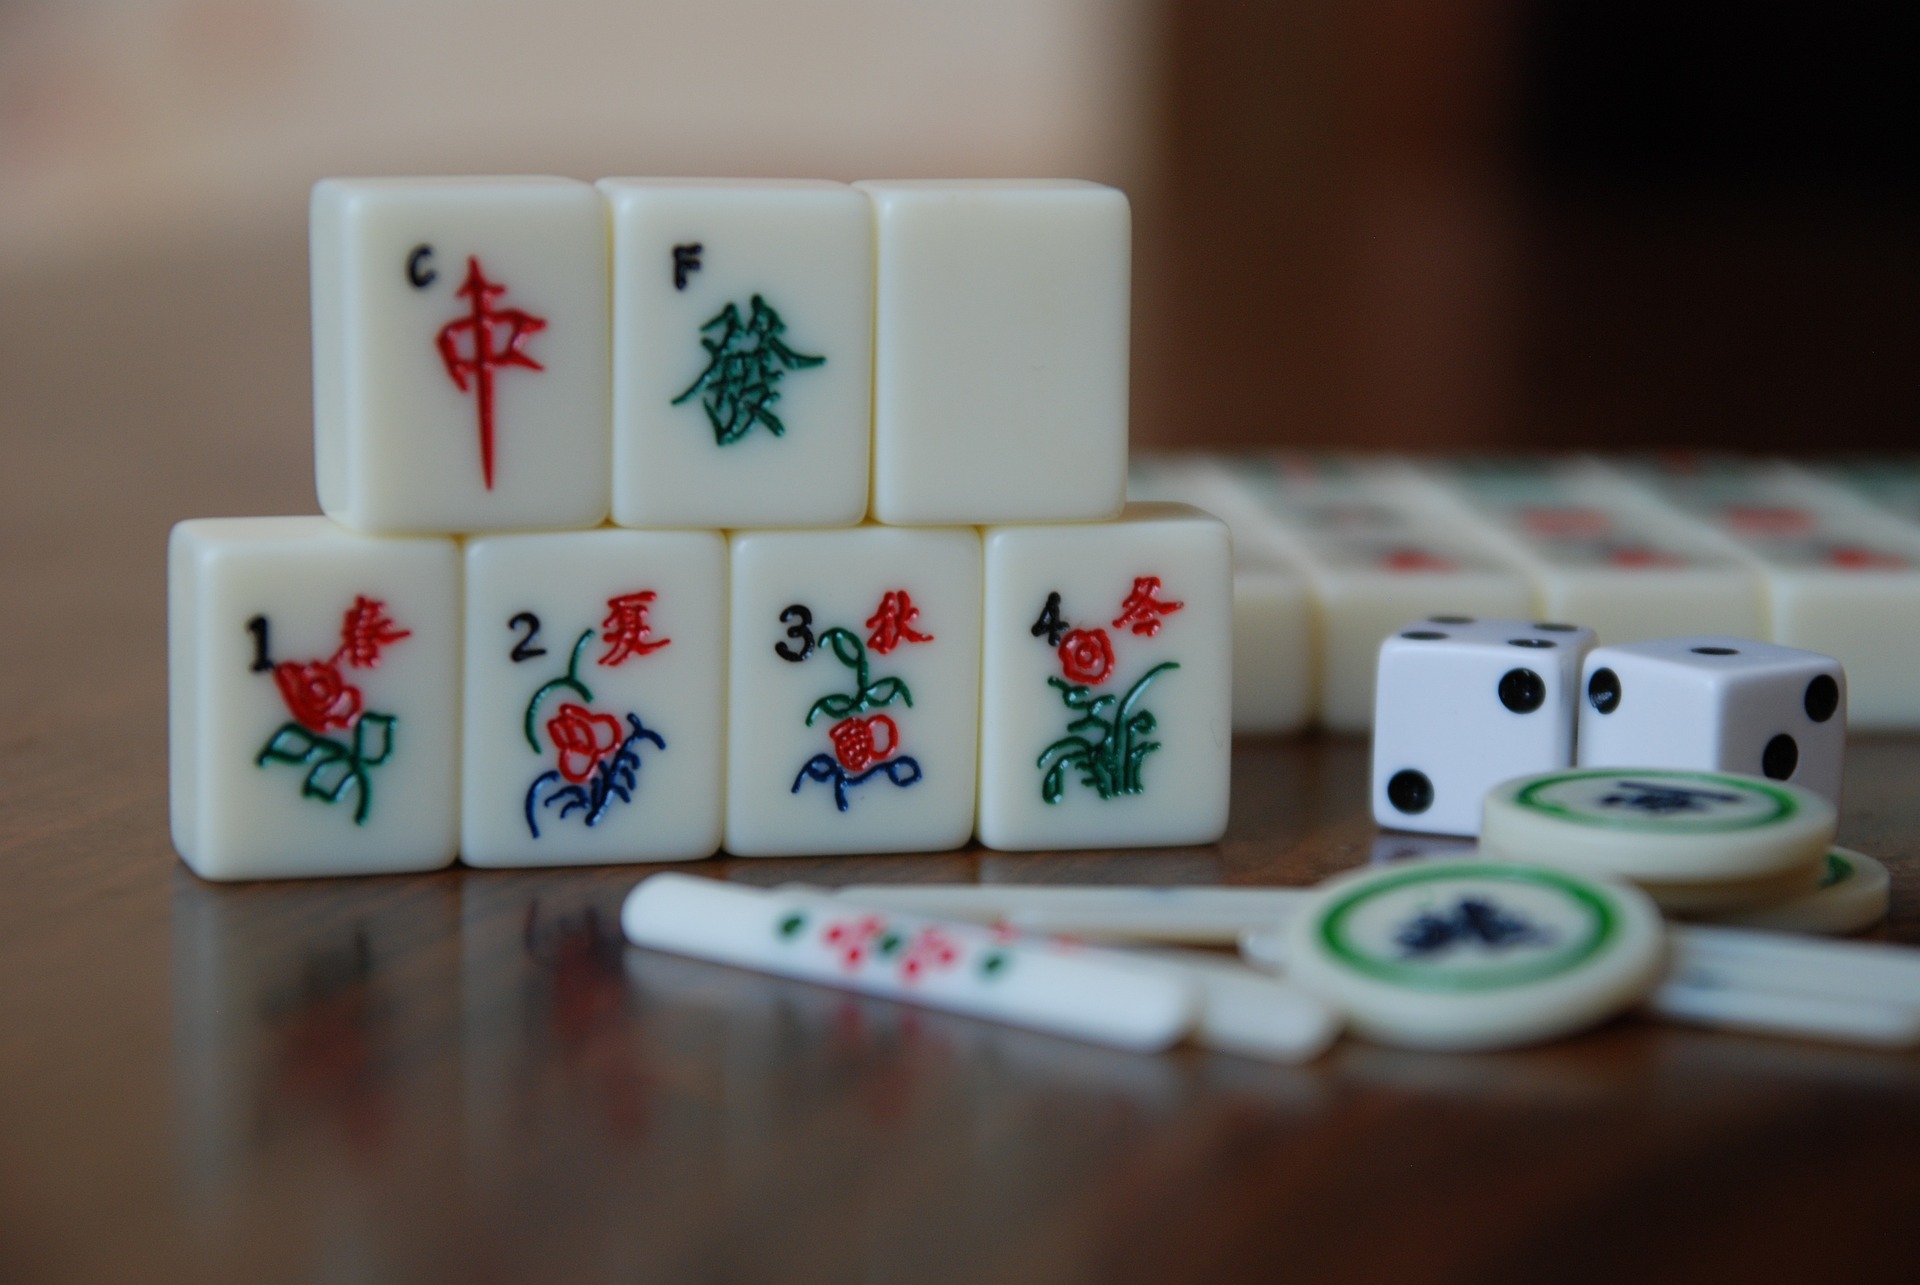 Mahjong 2P: Chinese Mahjong - Apps on Google Play